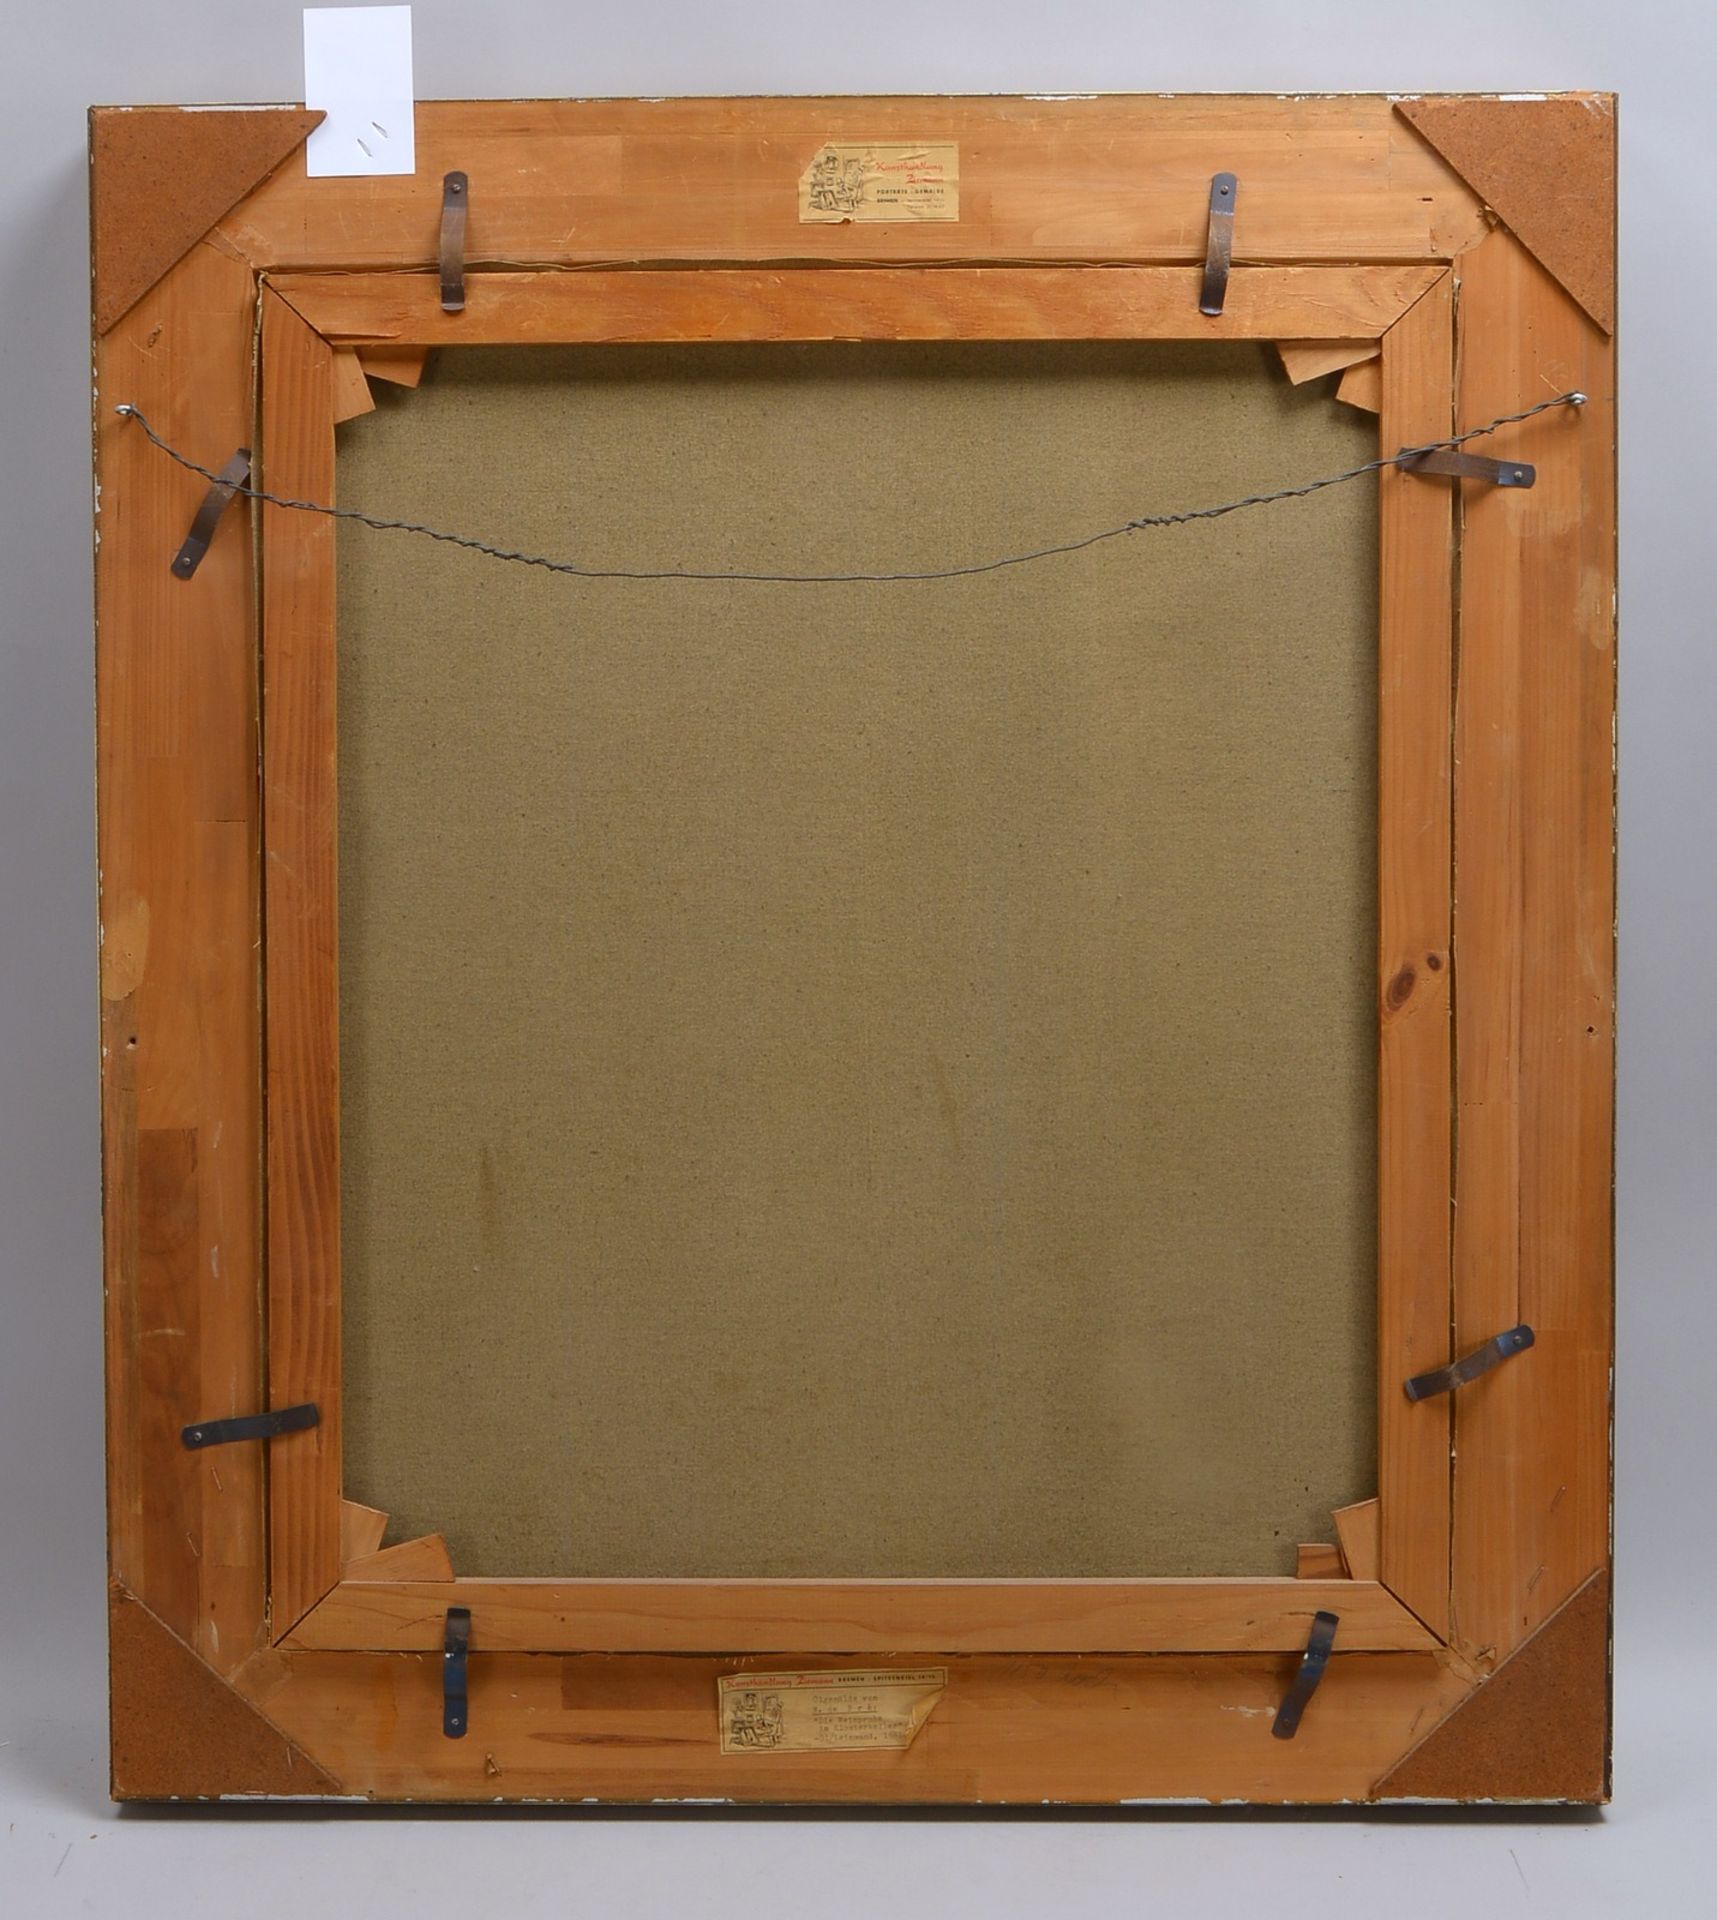 de Pré, Willi, 'Im Weinkeller', Öl/Lw, unten rechts signiert; Rahmenmaße 89 x 78,5 cm - Bild 3 aus 3